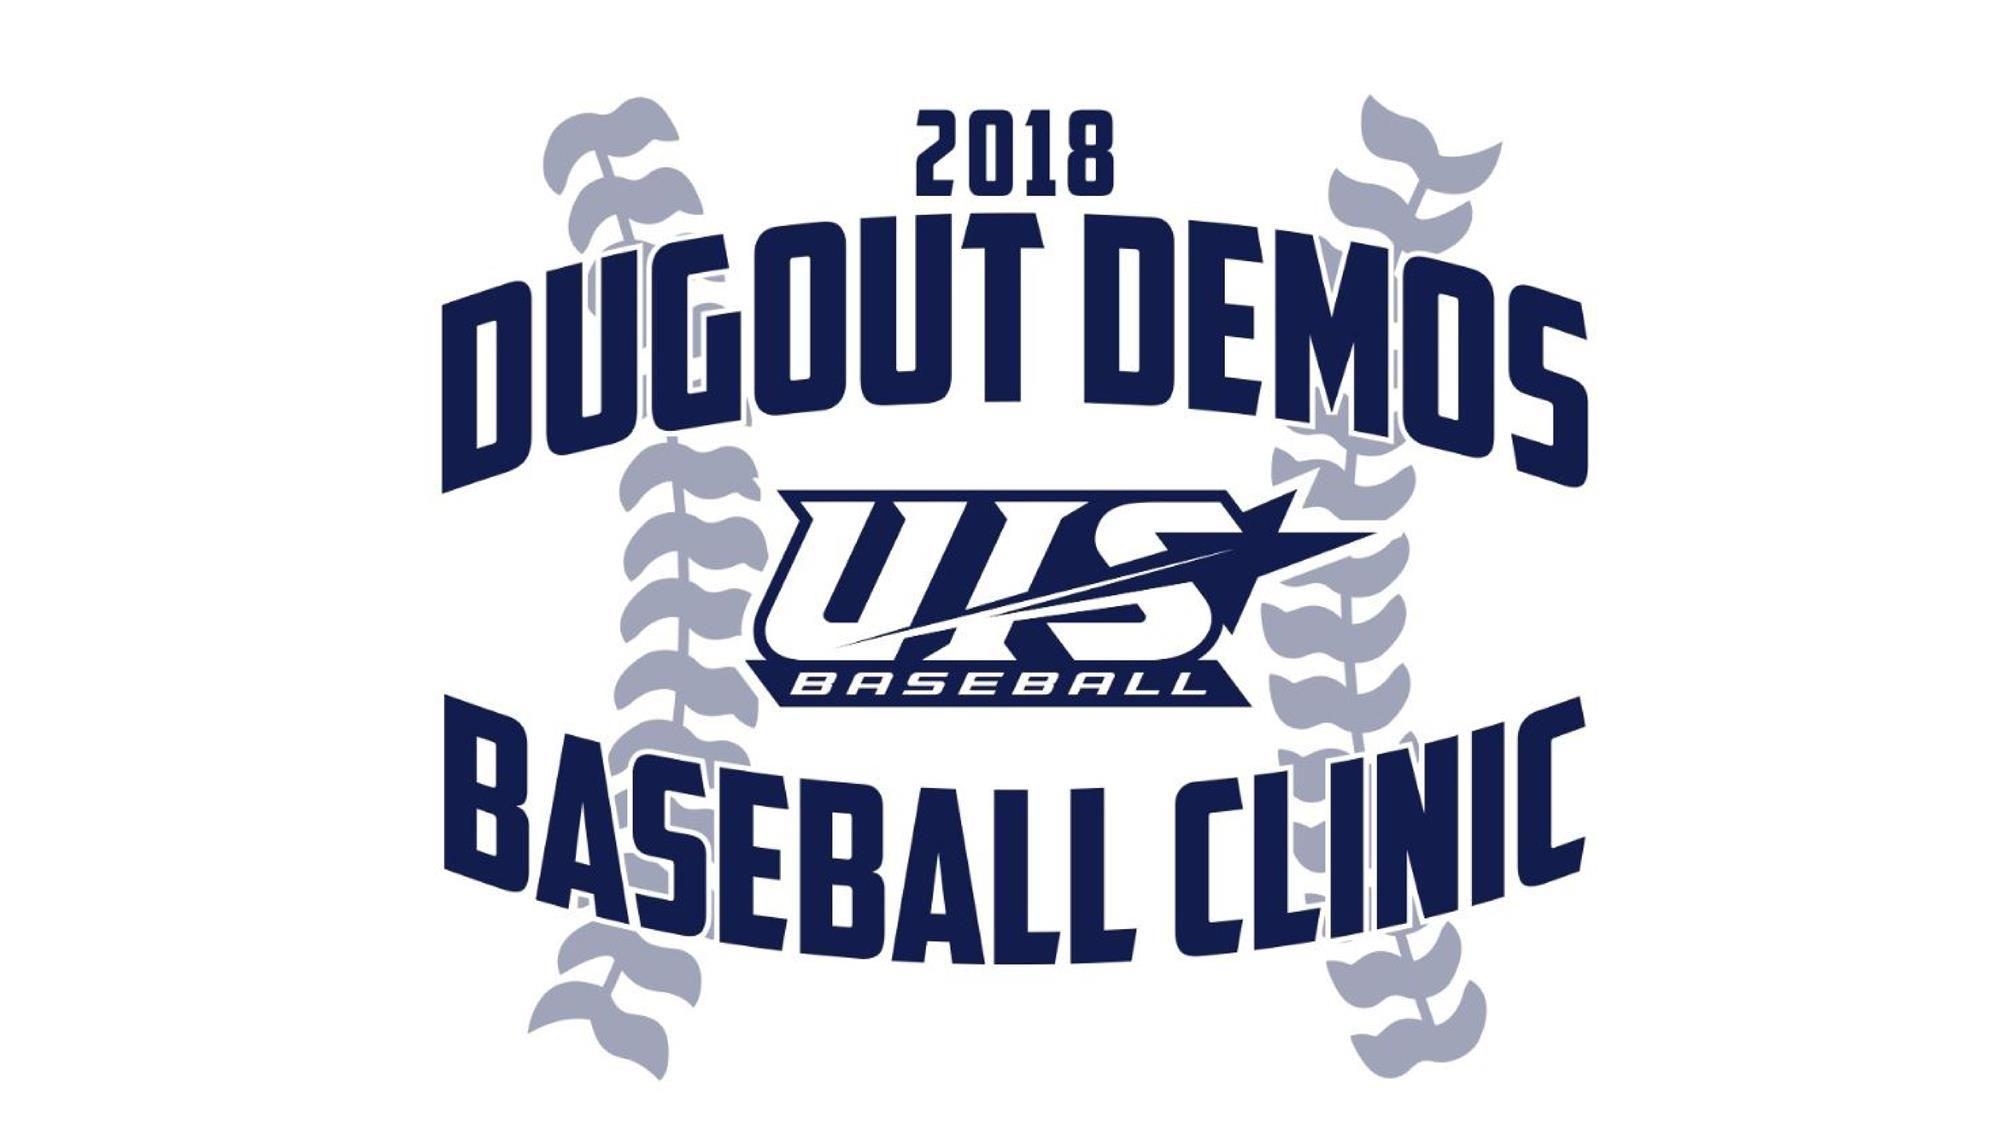 Dugout Logo - UIS Baseball to Host Dugout Demos Baseball Clinic on February 25 ...